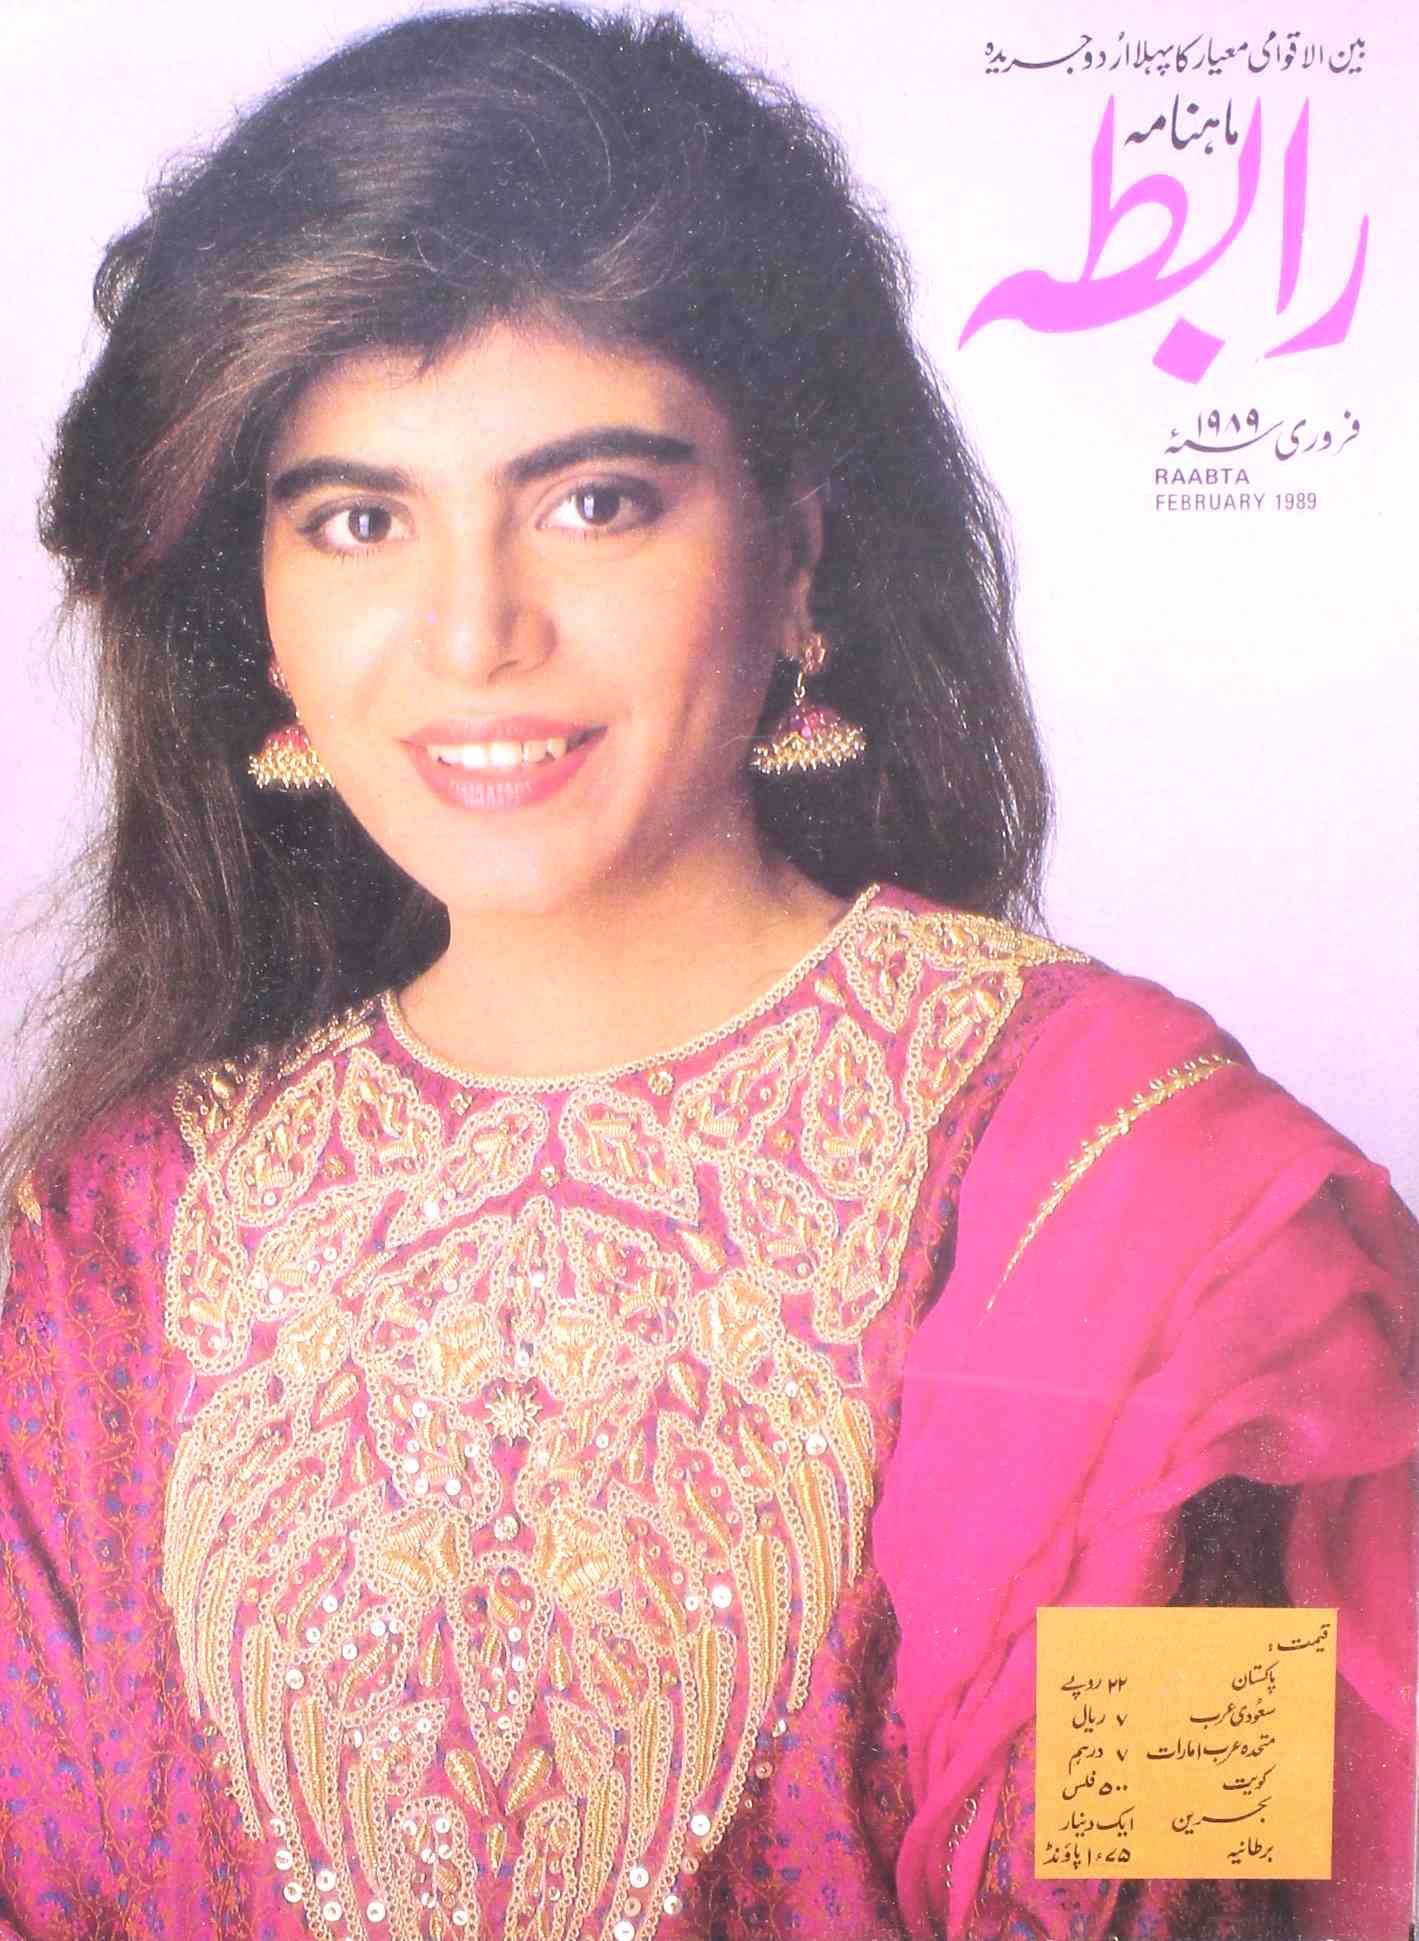 Raabta Jild 5 Shumarah  8 February 1989 SVK